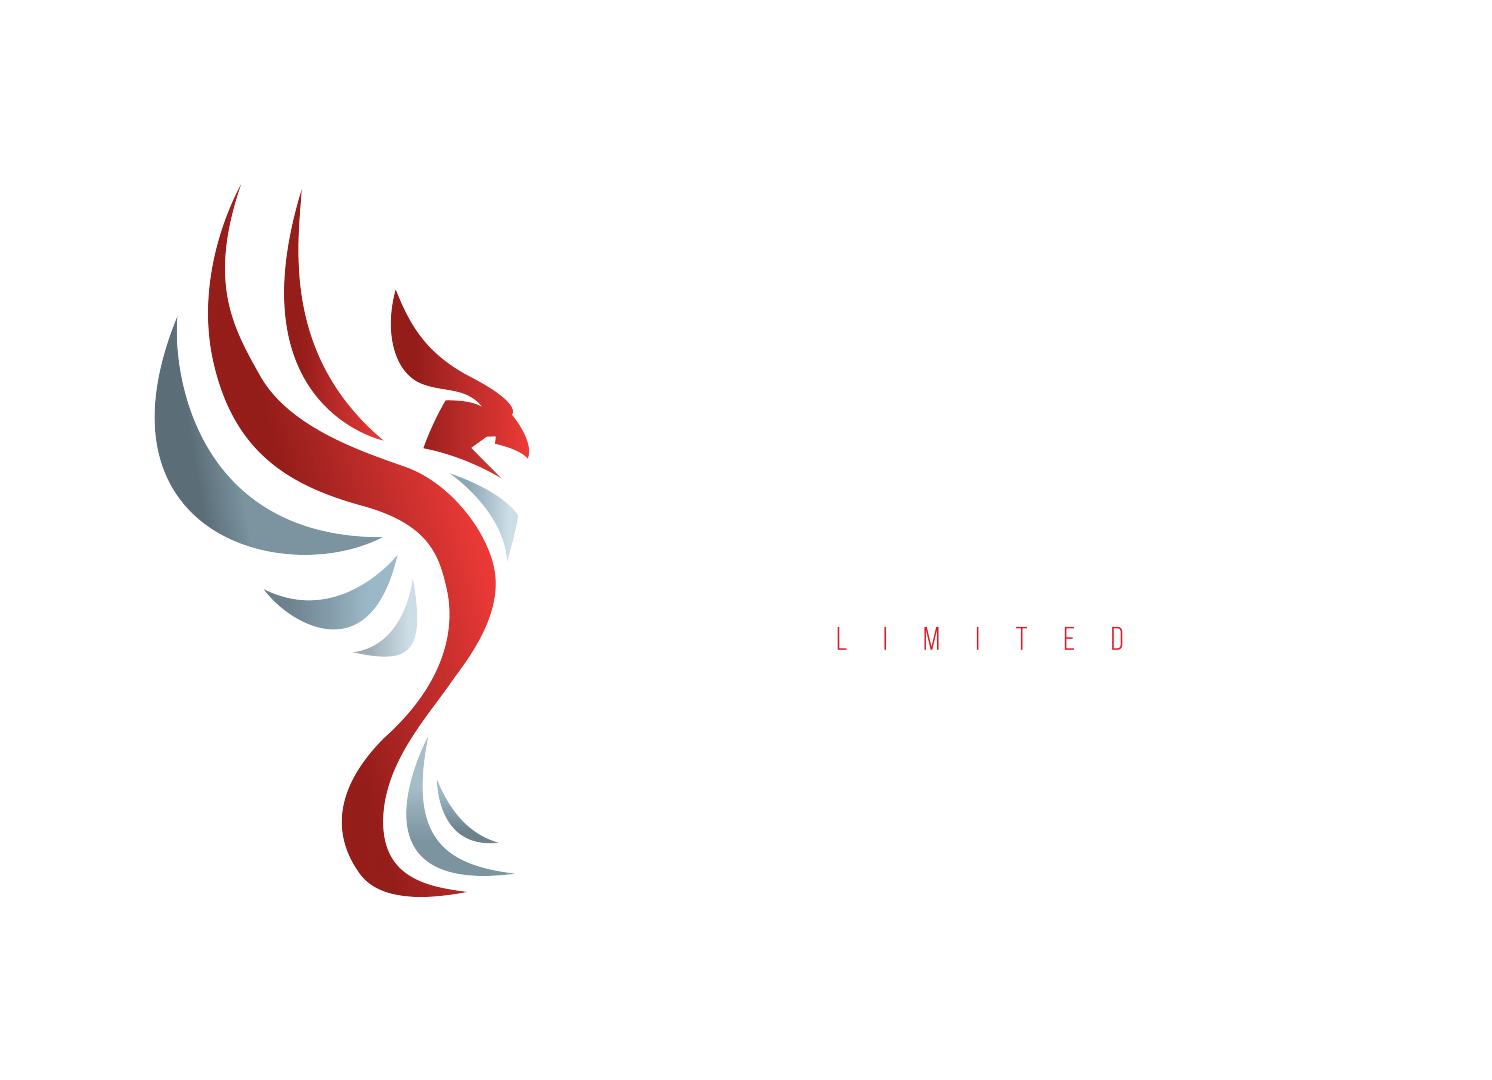 March Elevator Ltd